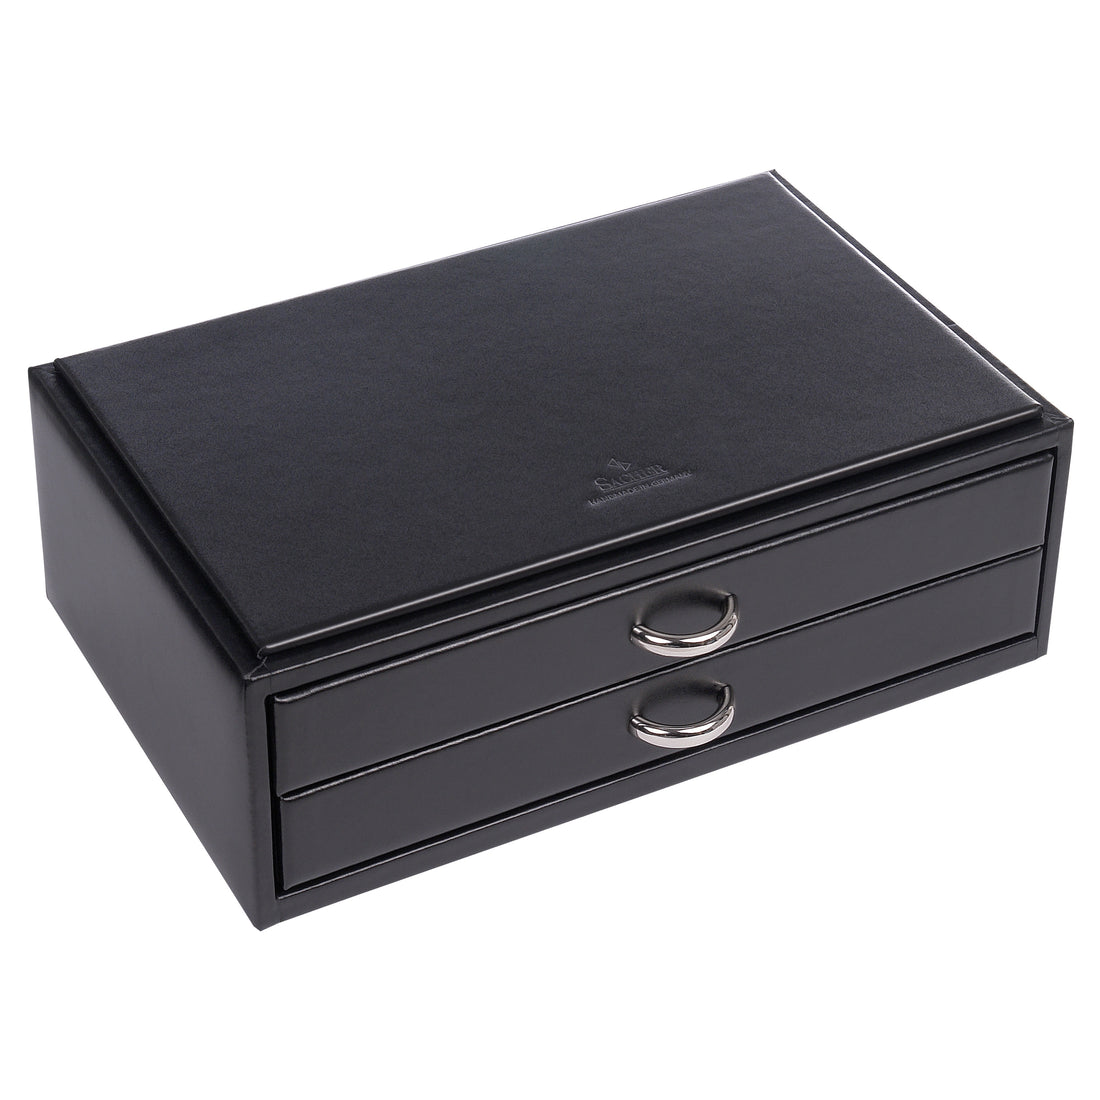 flex-module (without drawers) VARIO vario / black (leather)